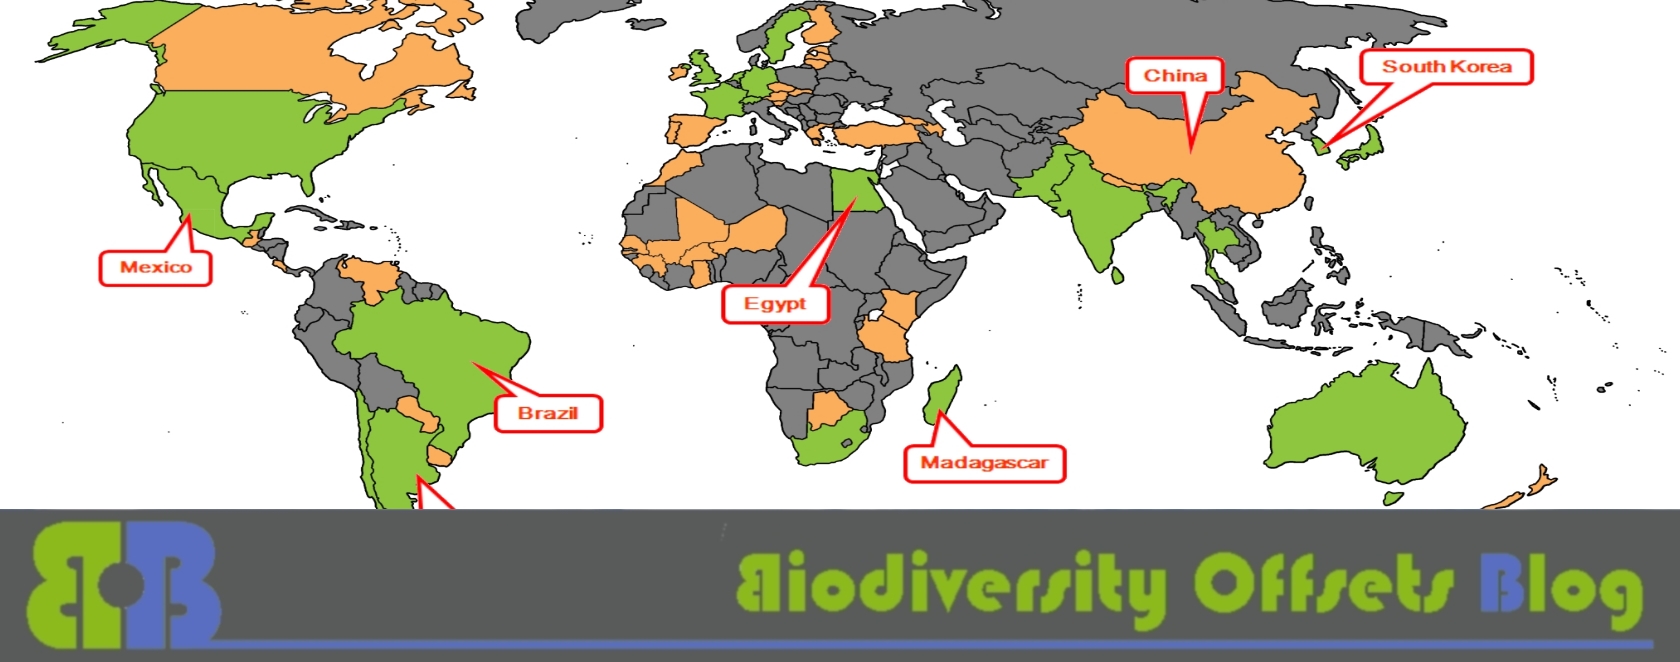 Biodiversity Offsets Blog Logo_hellgruen_worldwide examples_1680